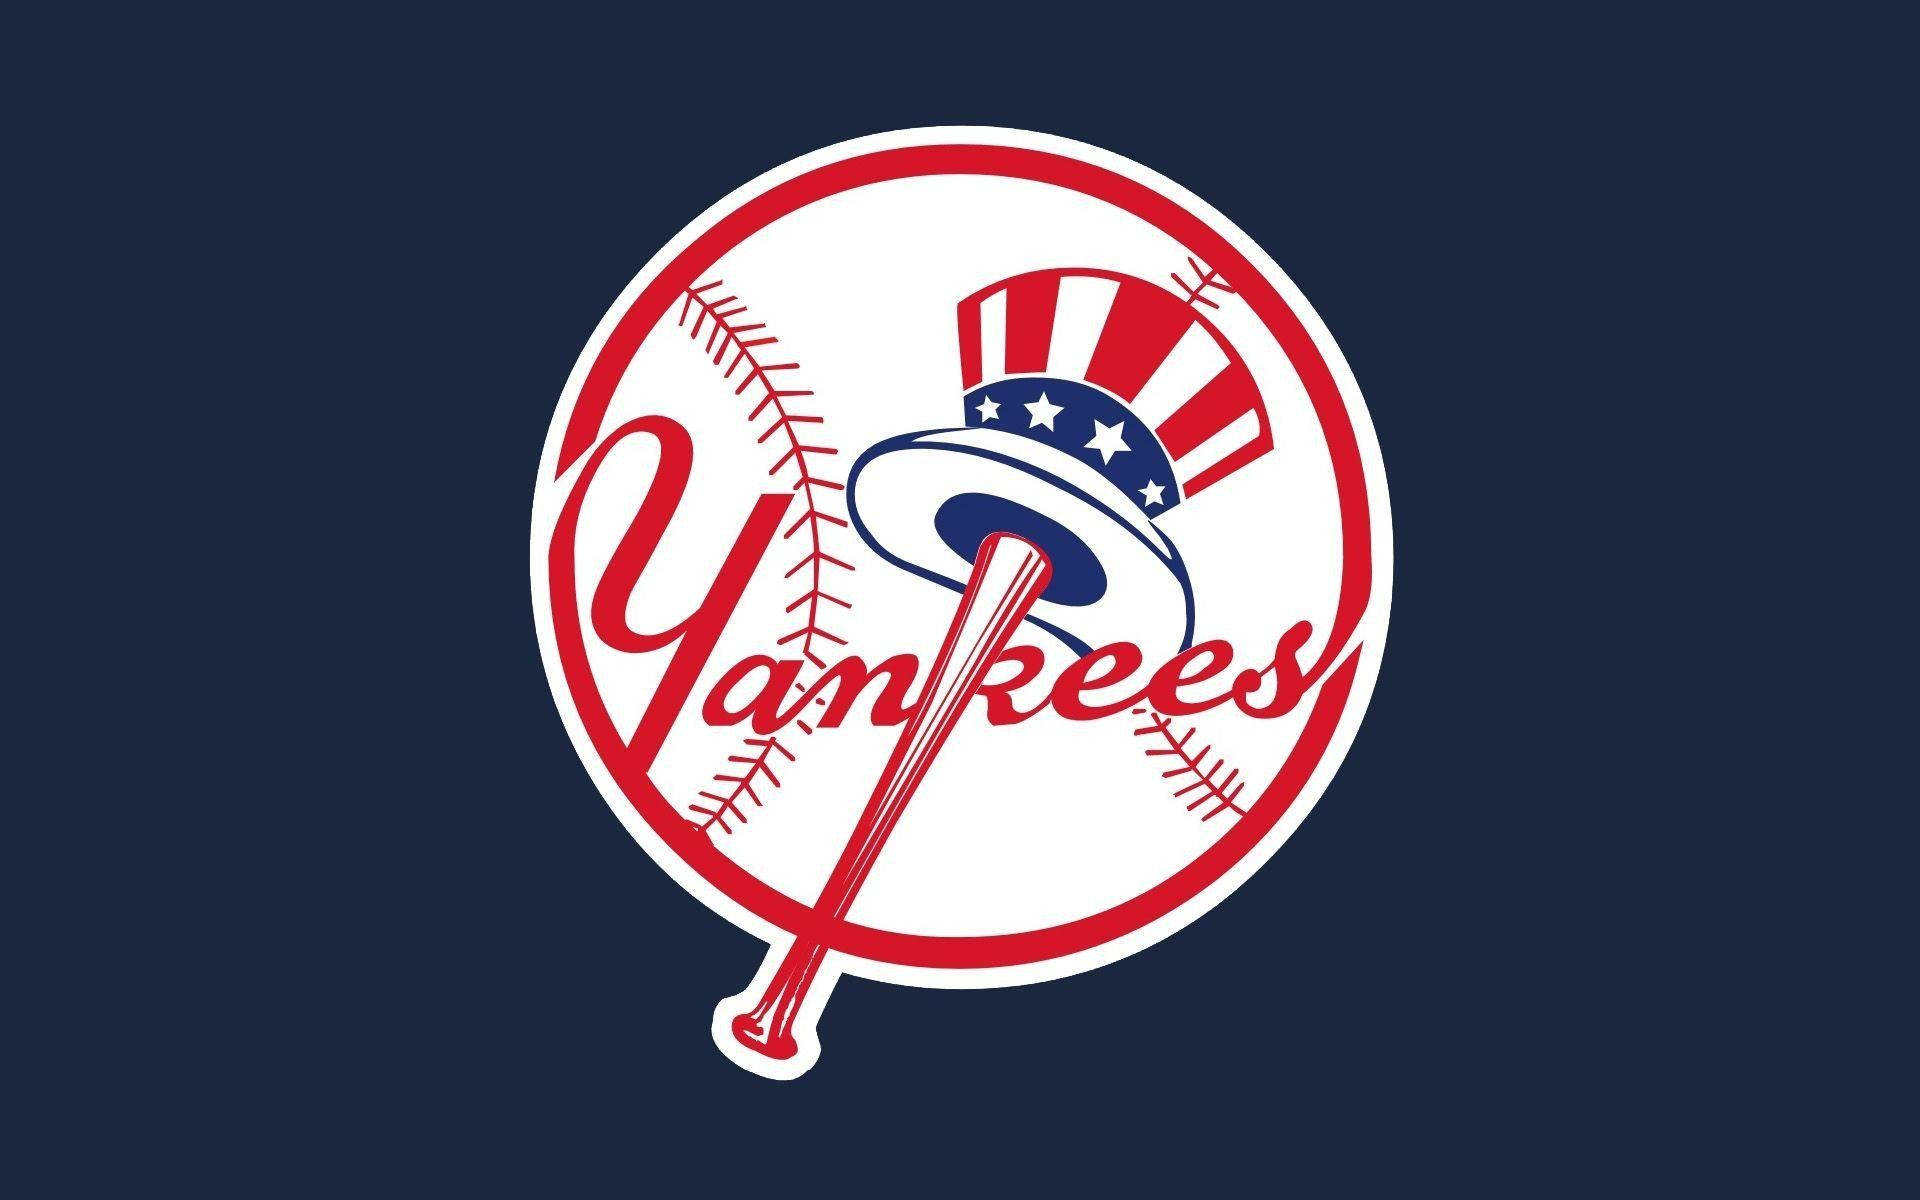 New York Yankees  Free New York Yankees background image  New York  Yankees wallpapers  New york yankees logo New york yankees New york  yankees wallpaper